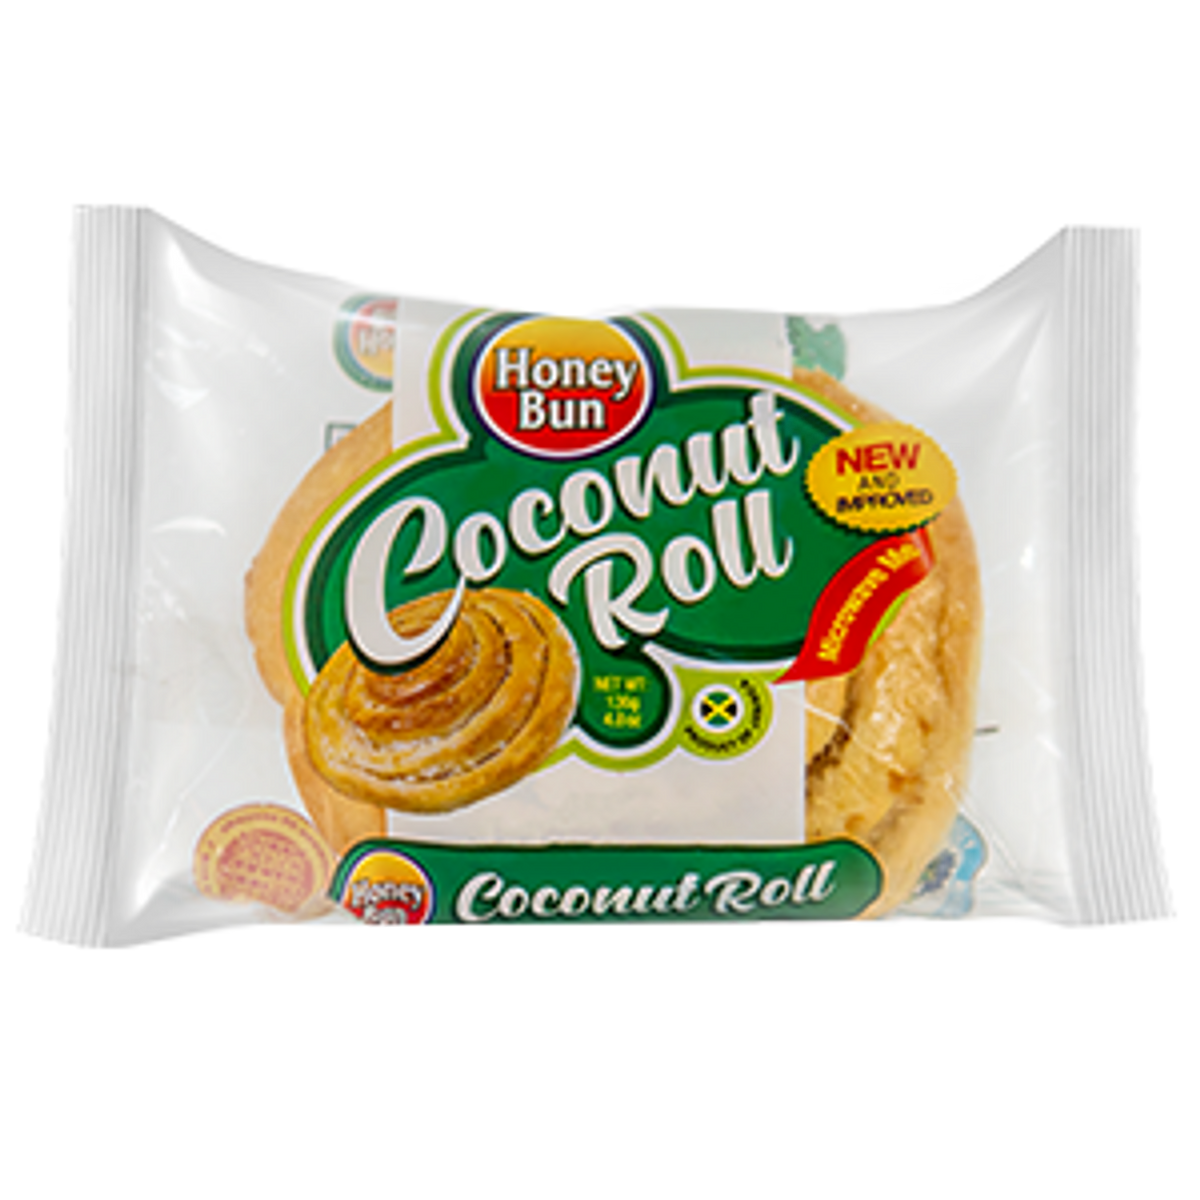 Honey bun coconut roll